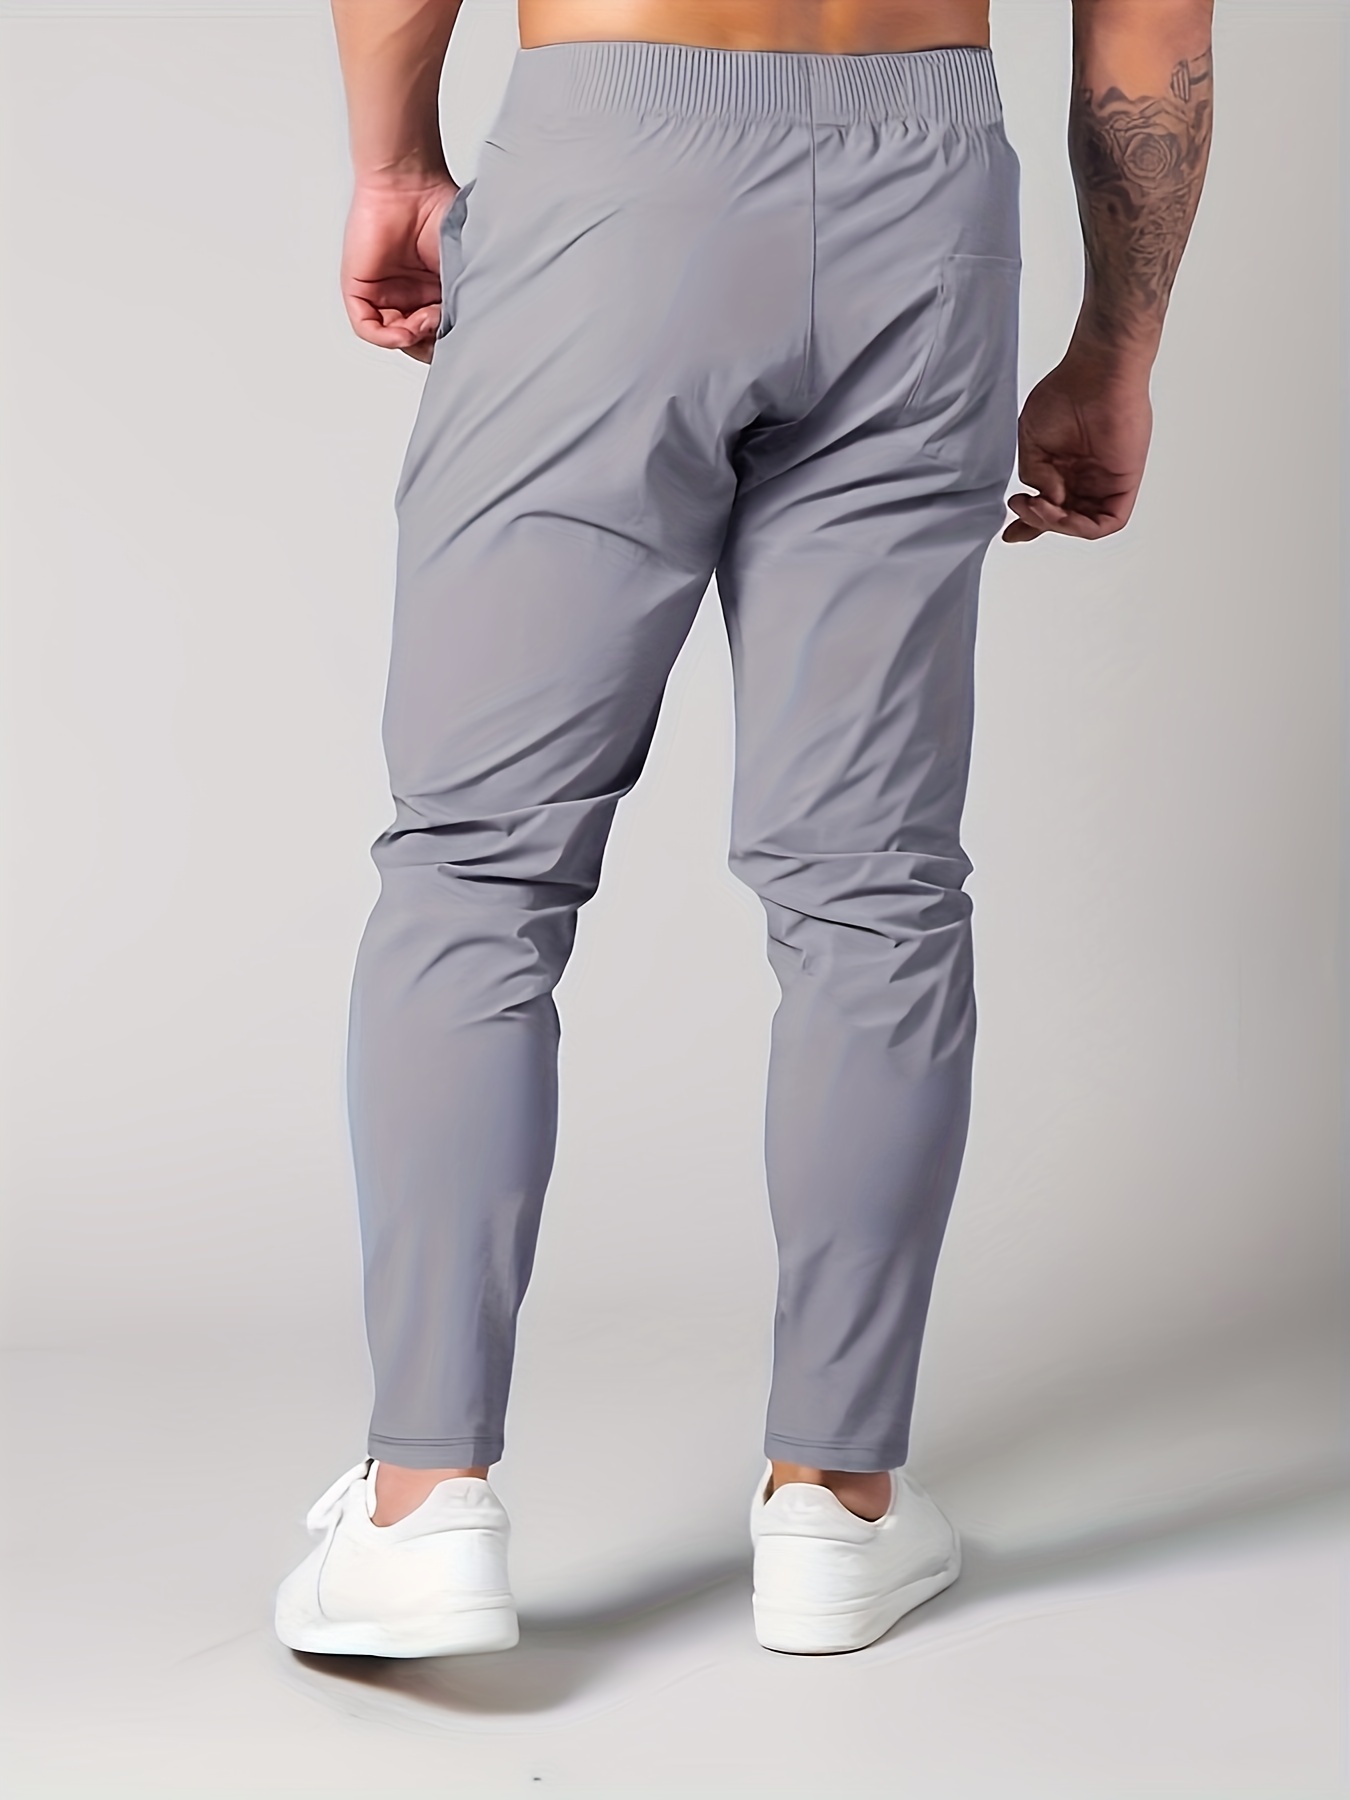 Nike Tech Fleece Jogger Pants Slim Fit Sports Long Pants Gray